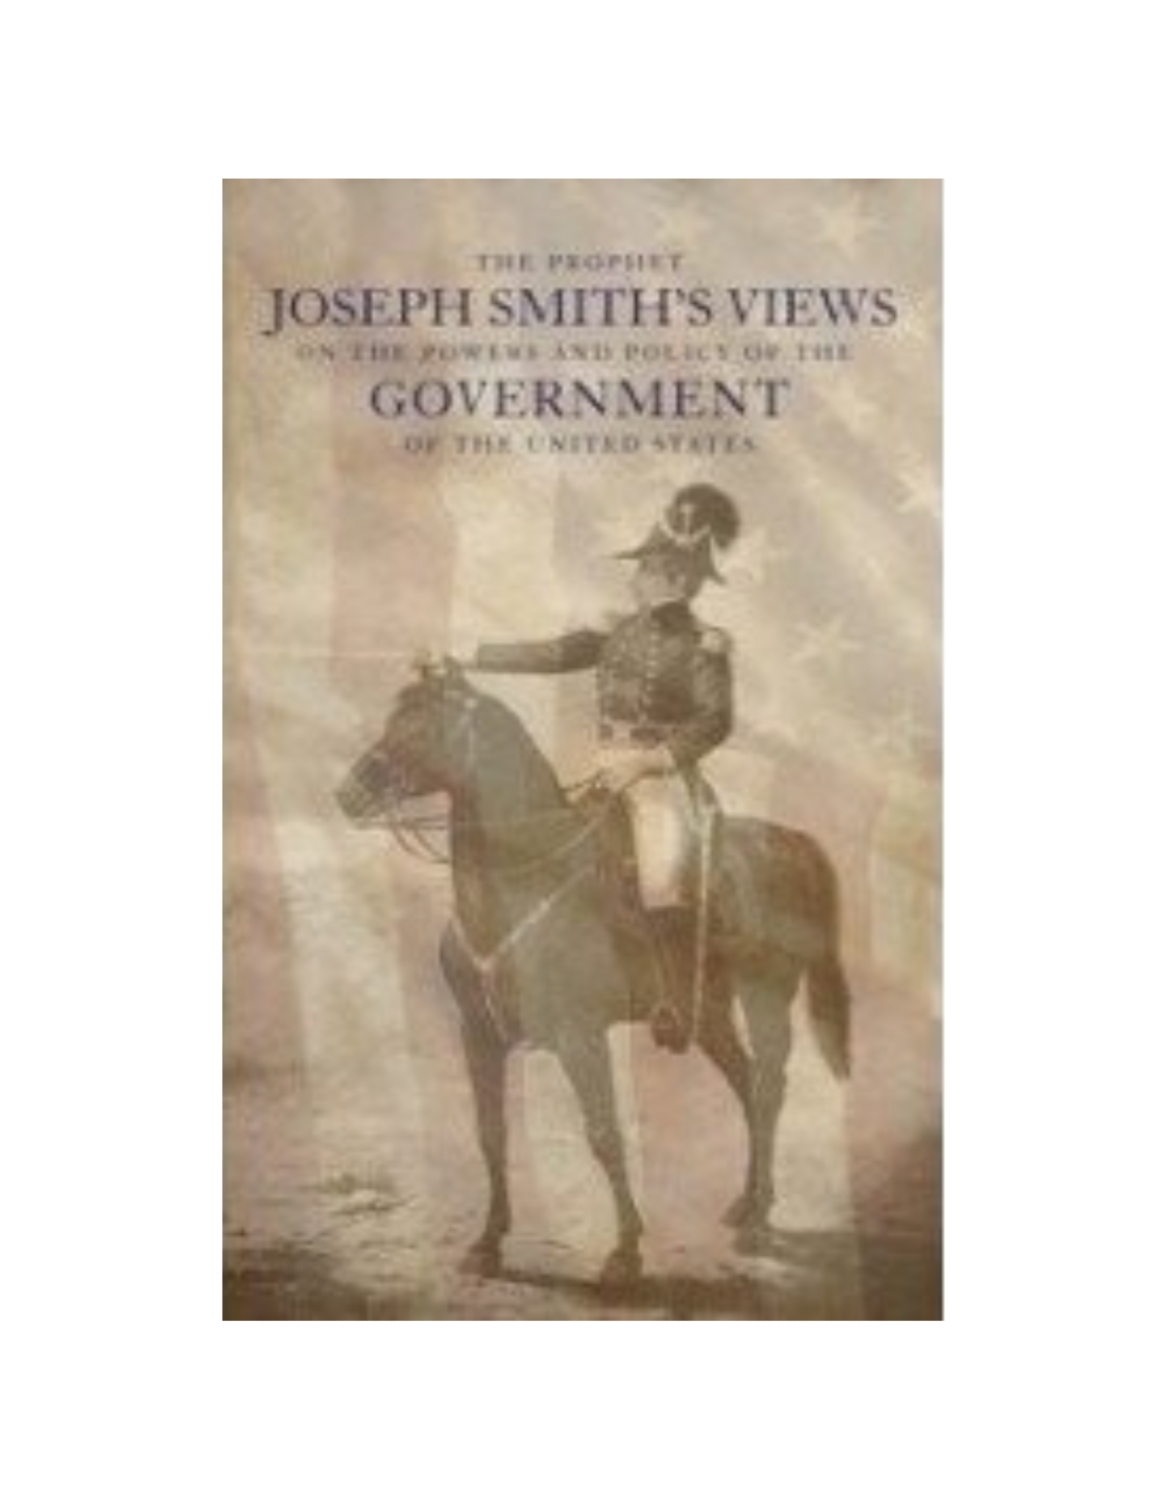 Joseph Smith's Views on Government (1886)